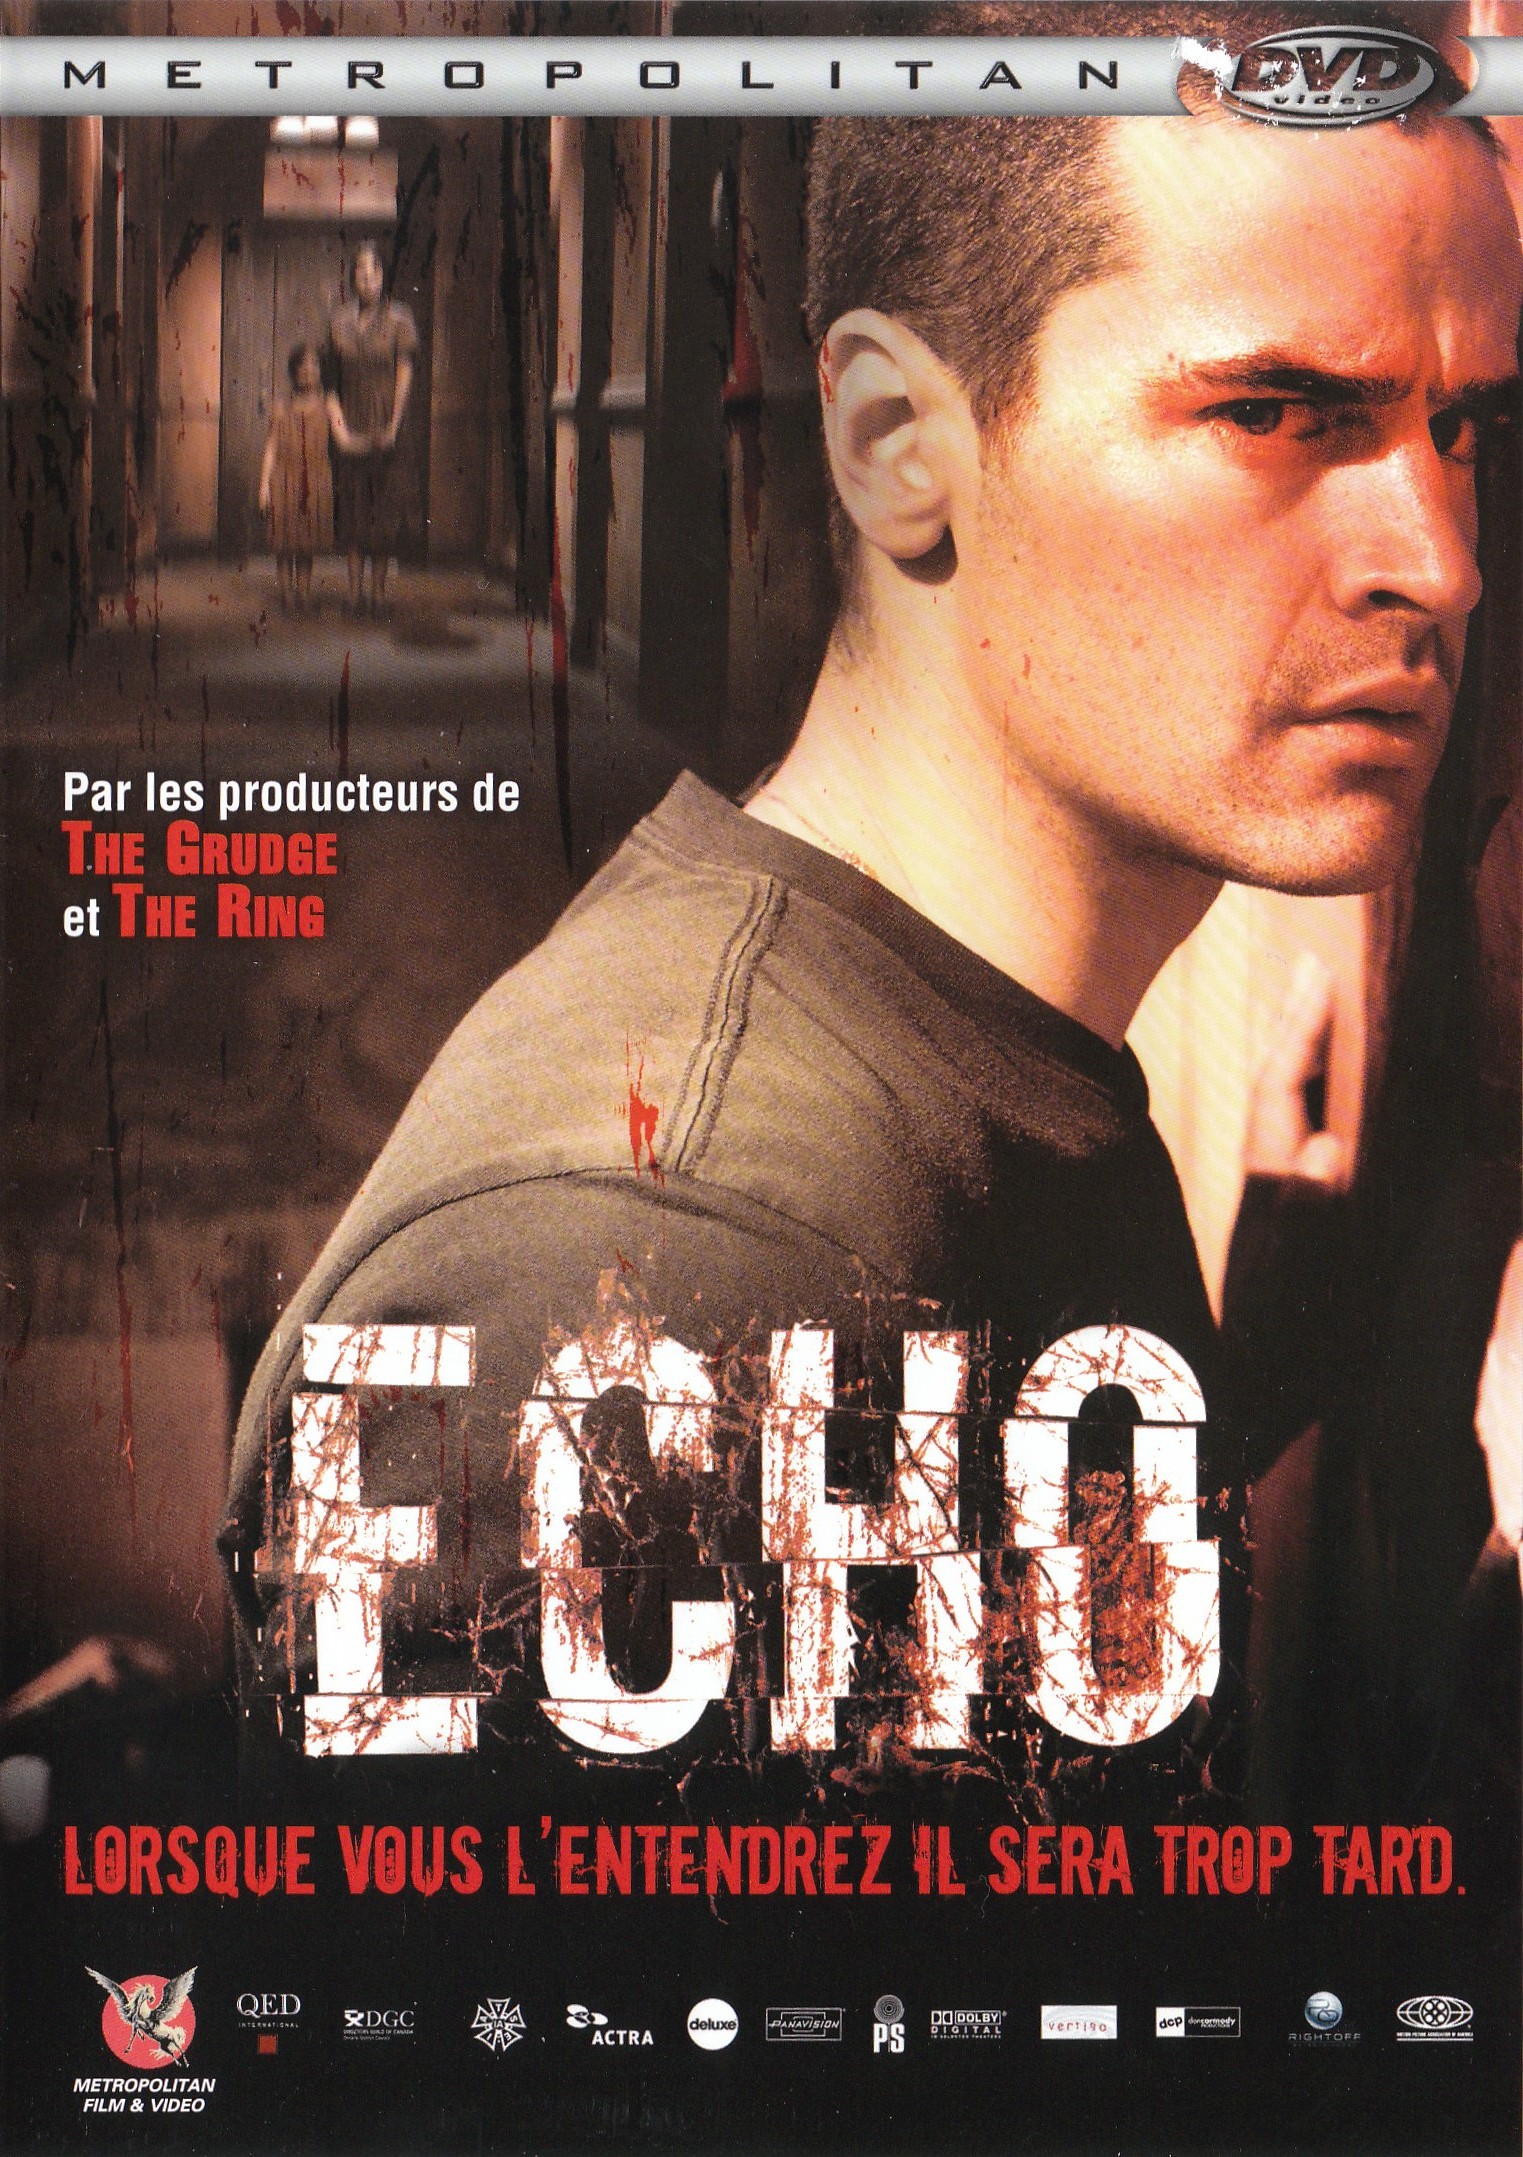 affiche du film Echo